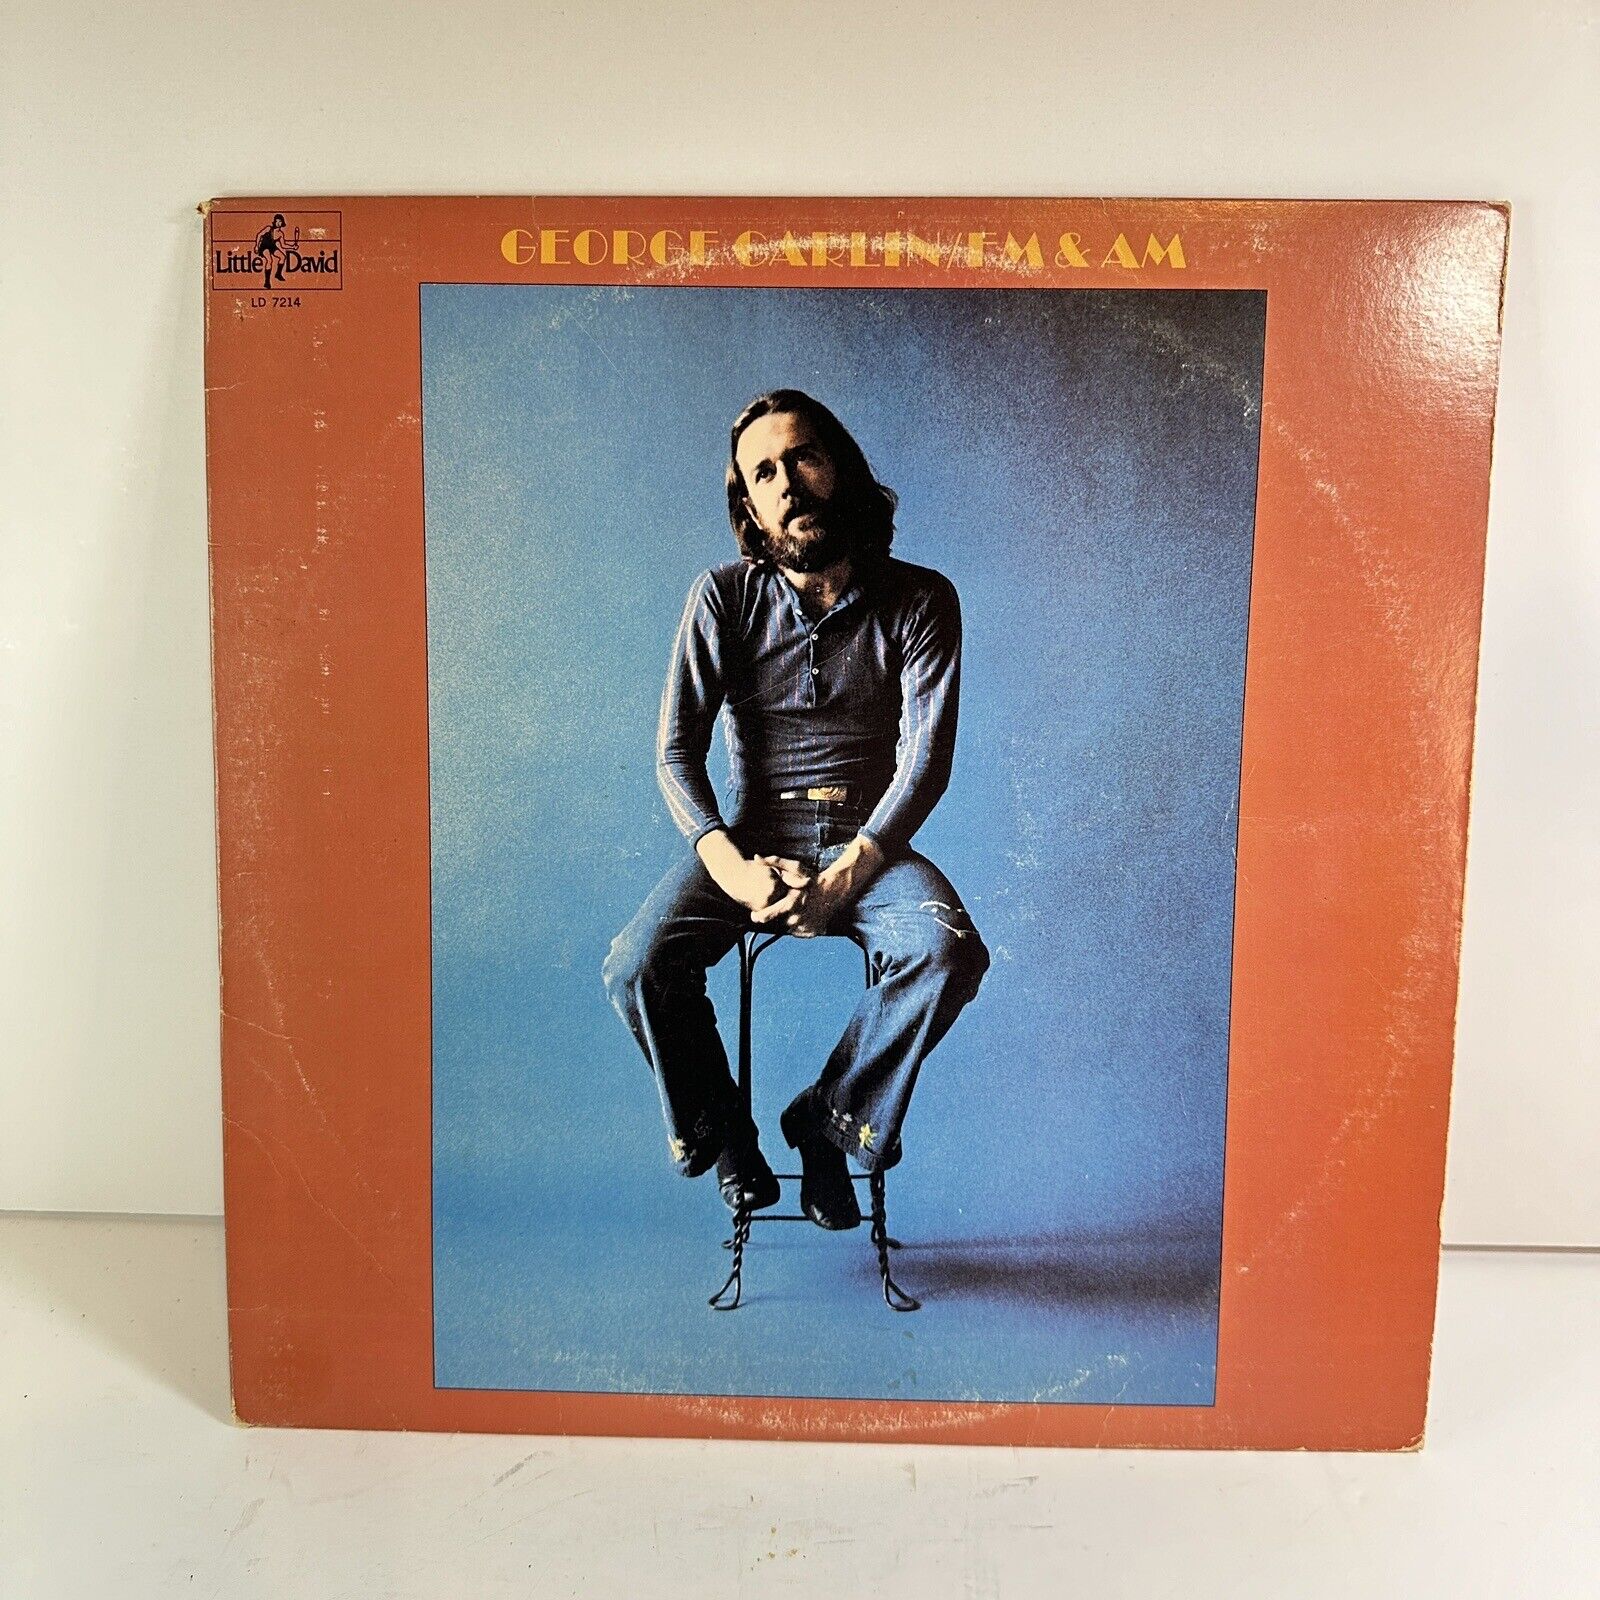 George Carlin FM & AM LP 1972 Little David Records LD 7214 comedy album vinyl